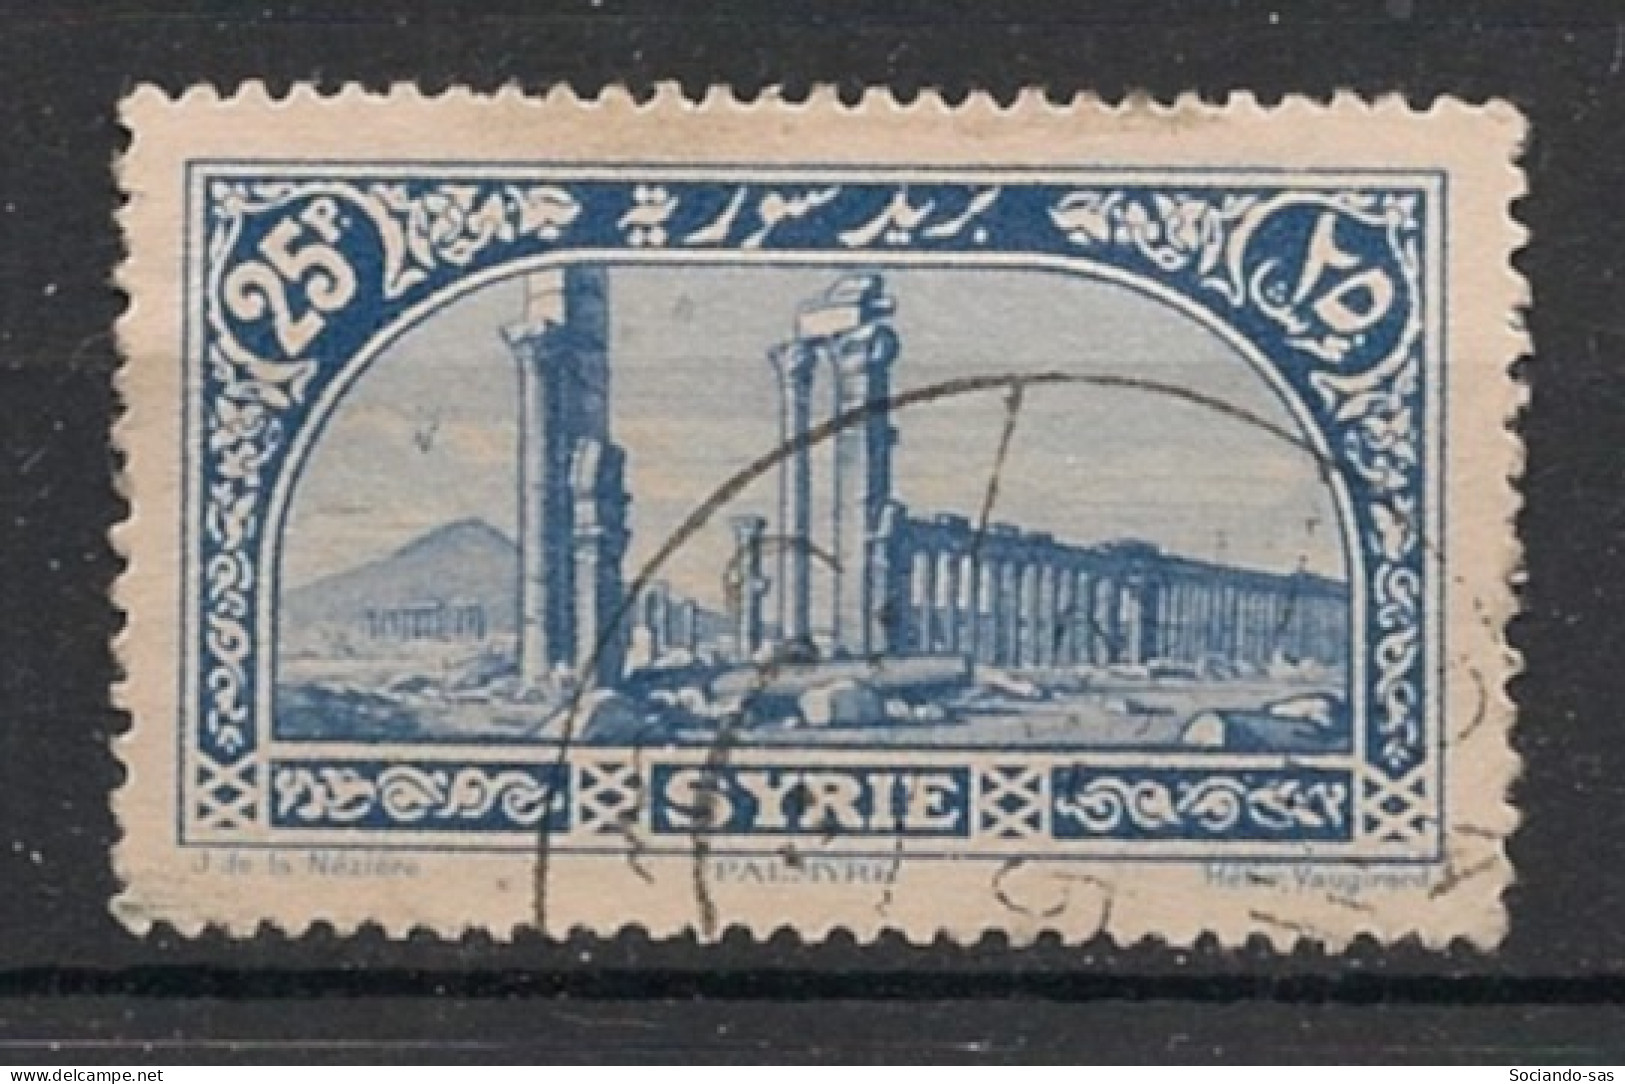 SYRIE - 1925 - N°YT. 166 - Palmyre 25pi Bleu - Oblitéré / Used - Used Stamps